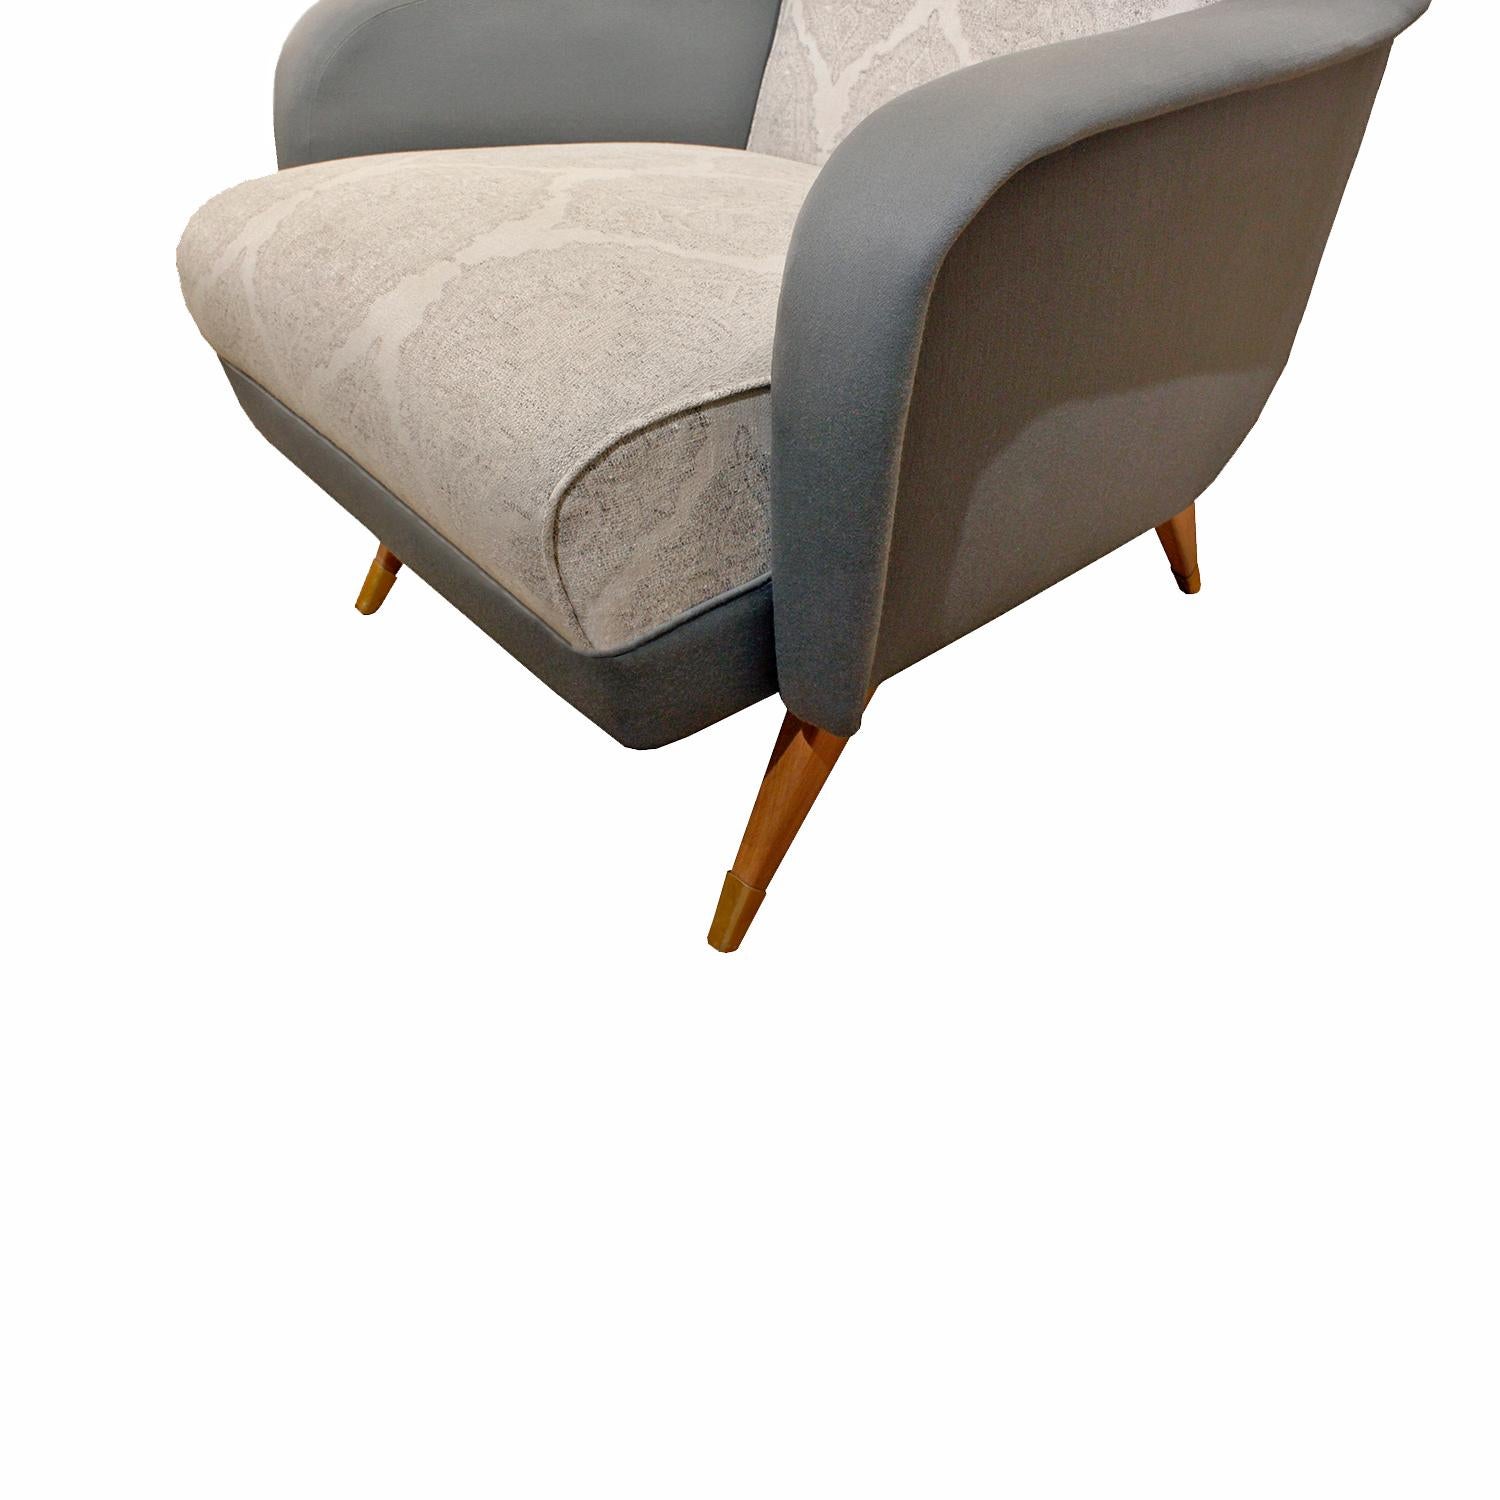 Mid-20th Century Pair of Sleek Italian Lounge Chairs, 1950s